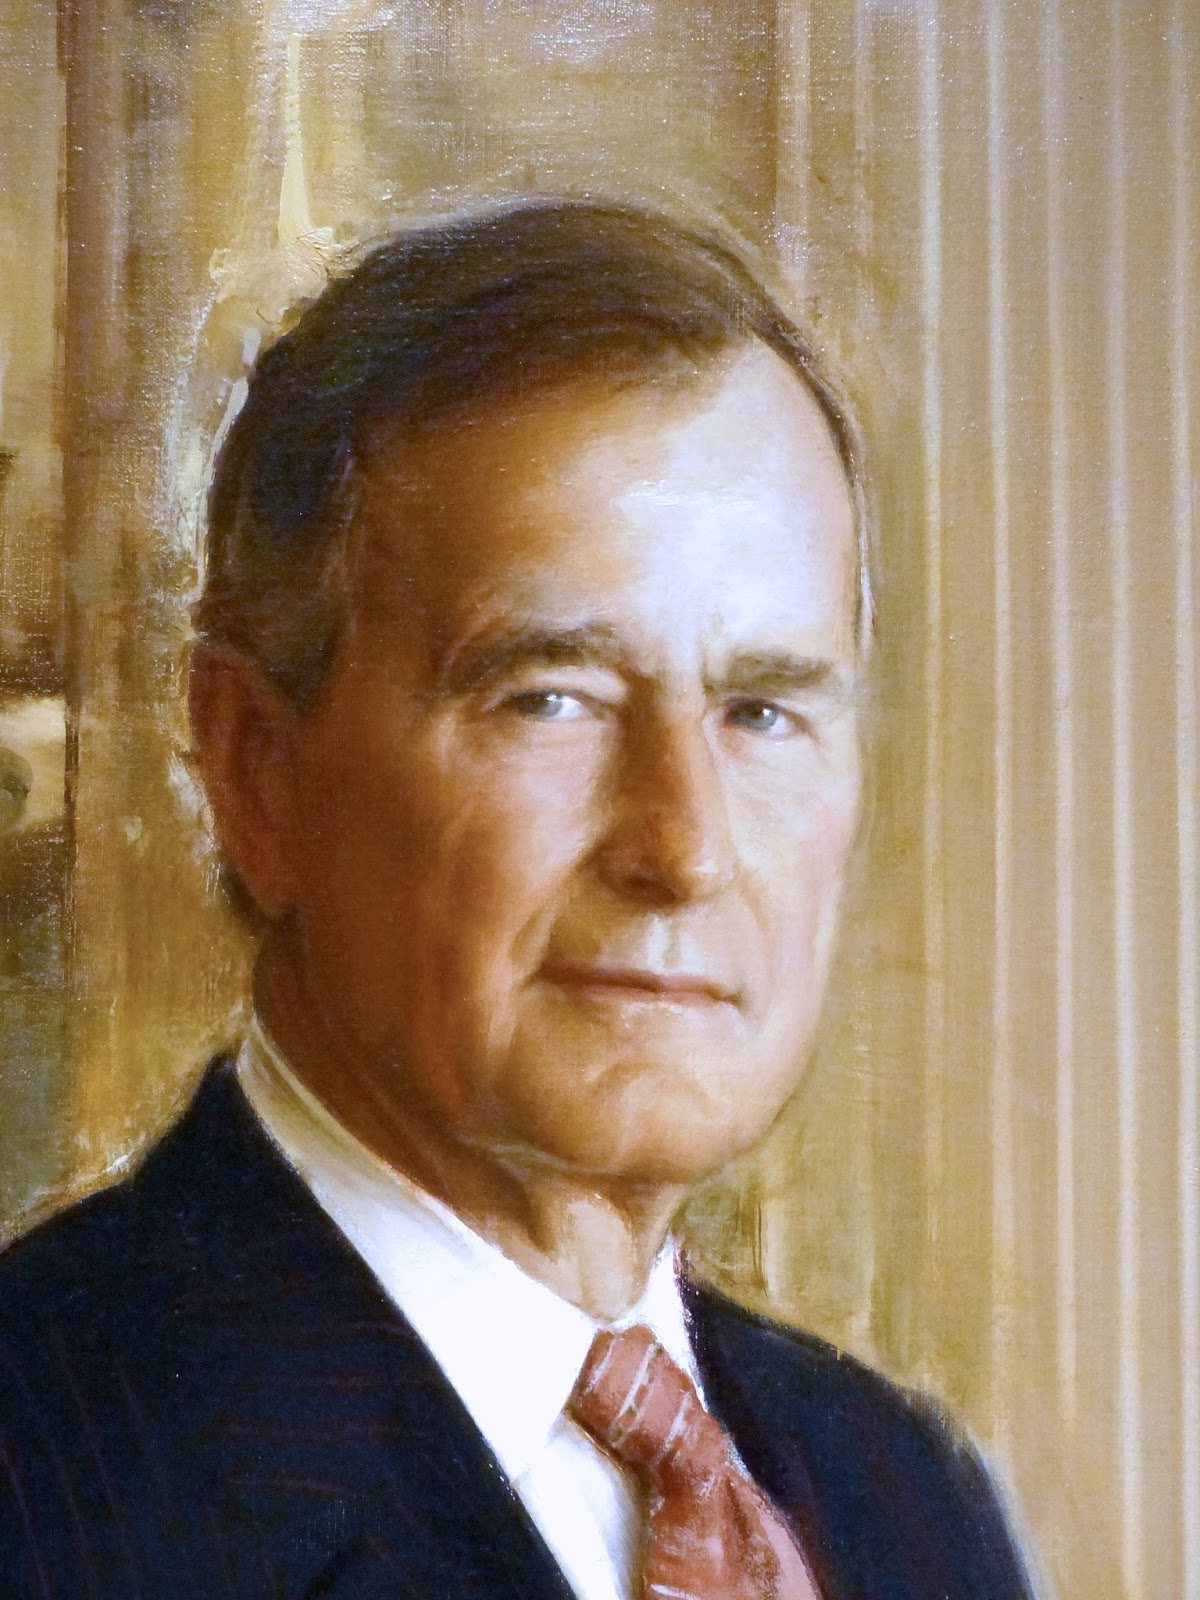 The Portrait Gallery: George H. W. Bush